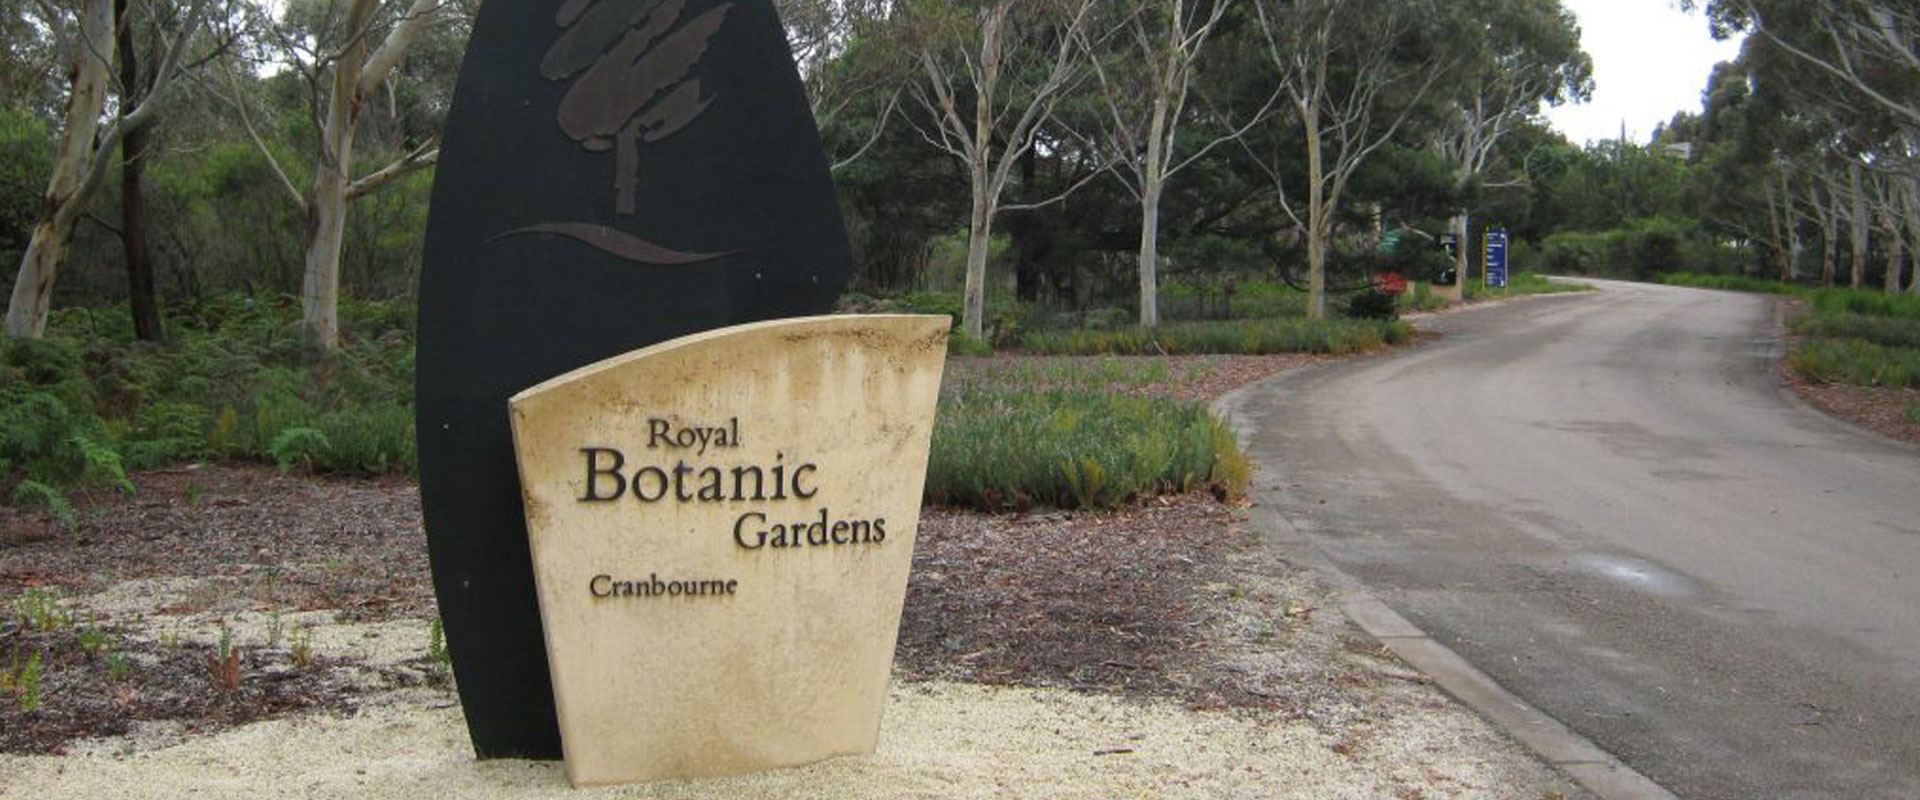 royal botanic gardens cranbourne